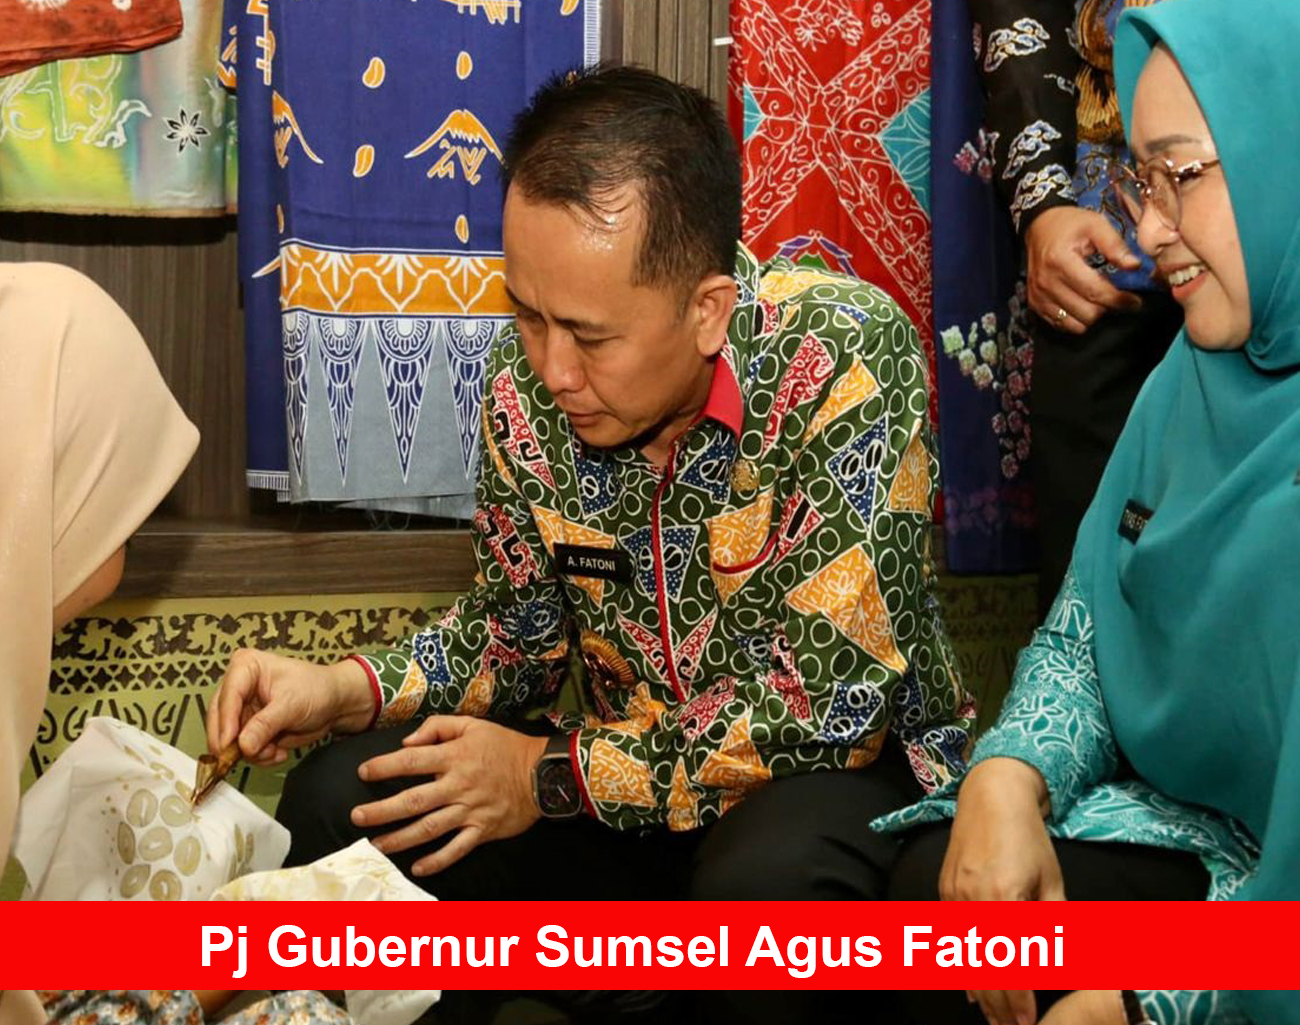 Pj Gubernur Sumsel Agus Fatoni Bersama Pj Ketua Dekranasda Sumsel Tinjau Gedung Dekranasda Pagar Alam